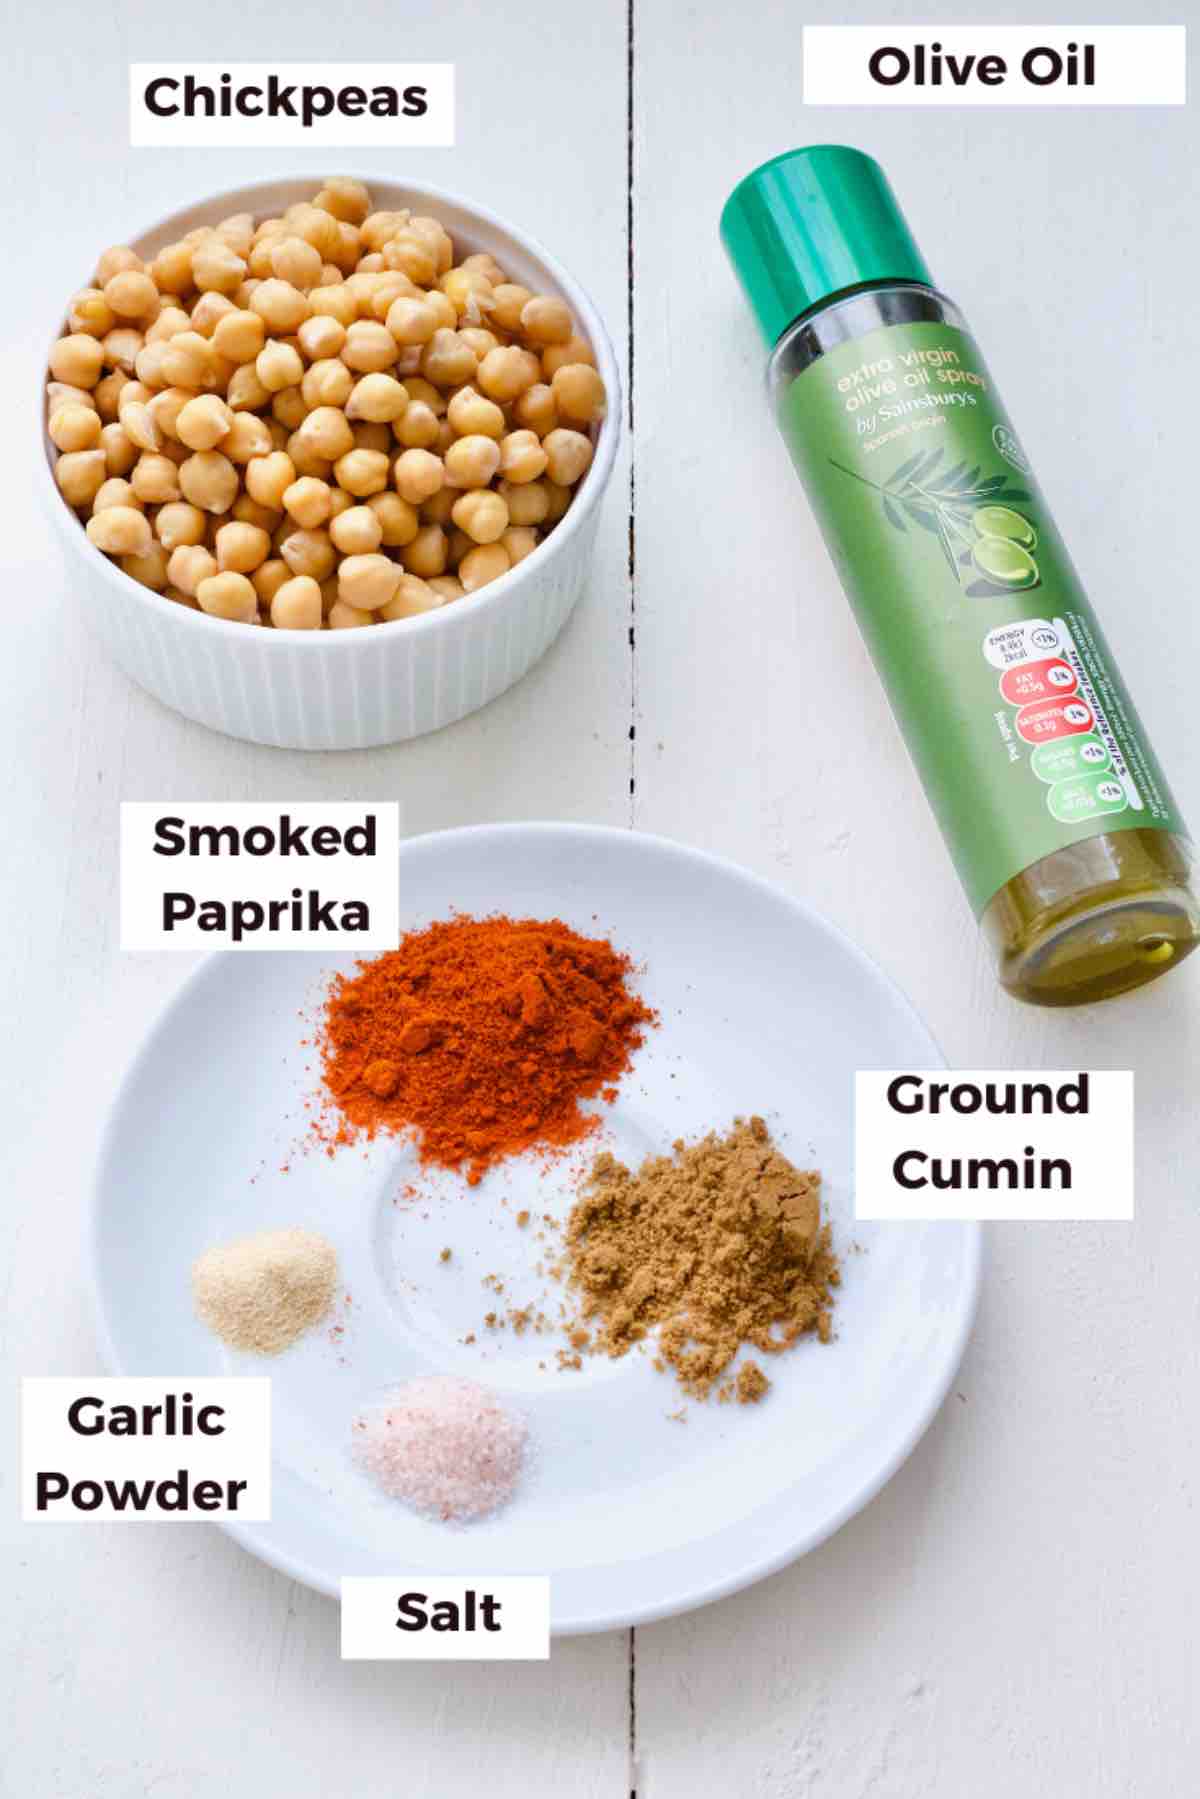 Ingredients for making air fryer chickpeas.